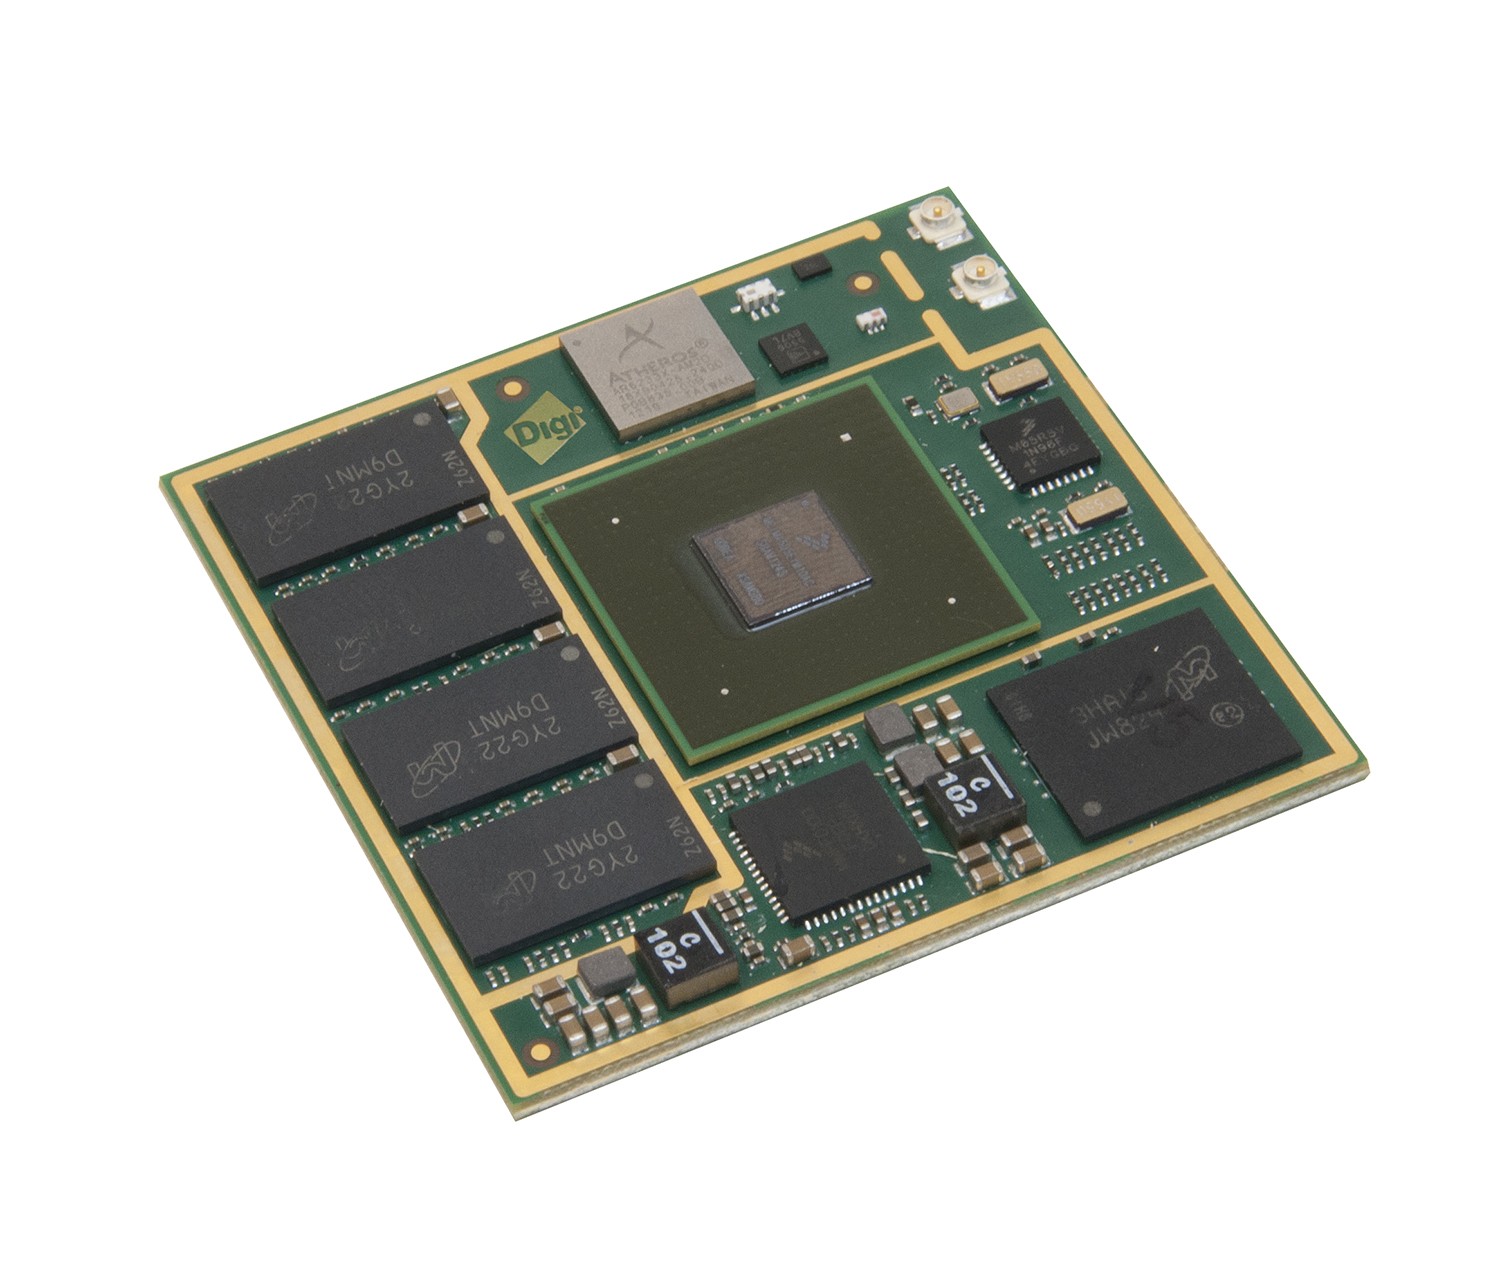 ConnectCore 6,i.MX6 Quad Core,-20 to 105C,1GHz,1GB DDR3,4GB eMMC,802.11abgn,BT4.0